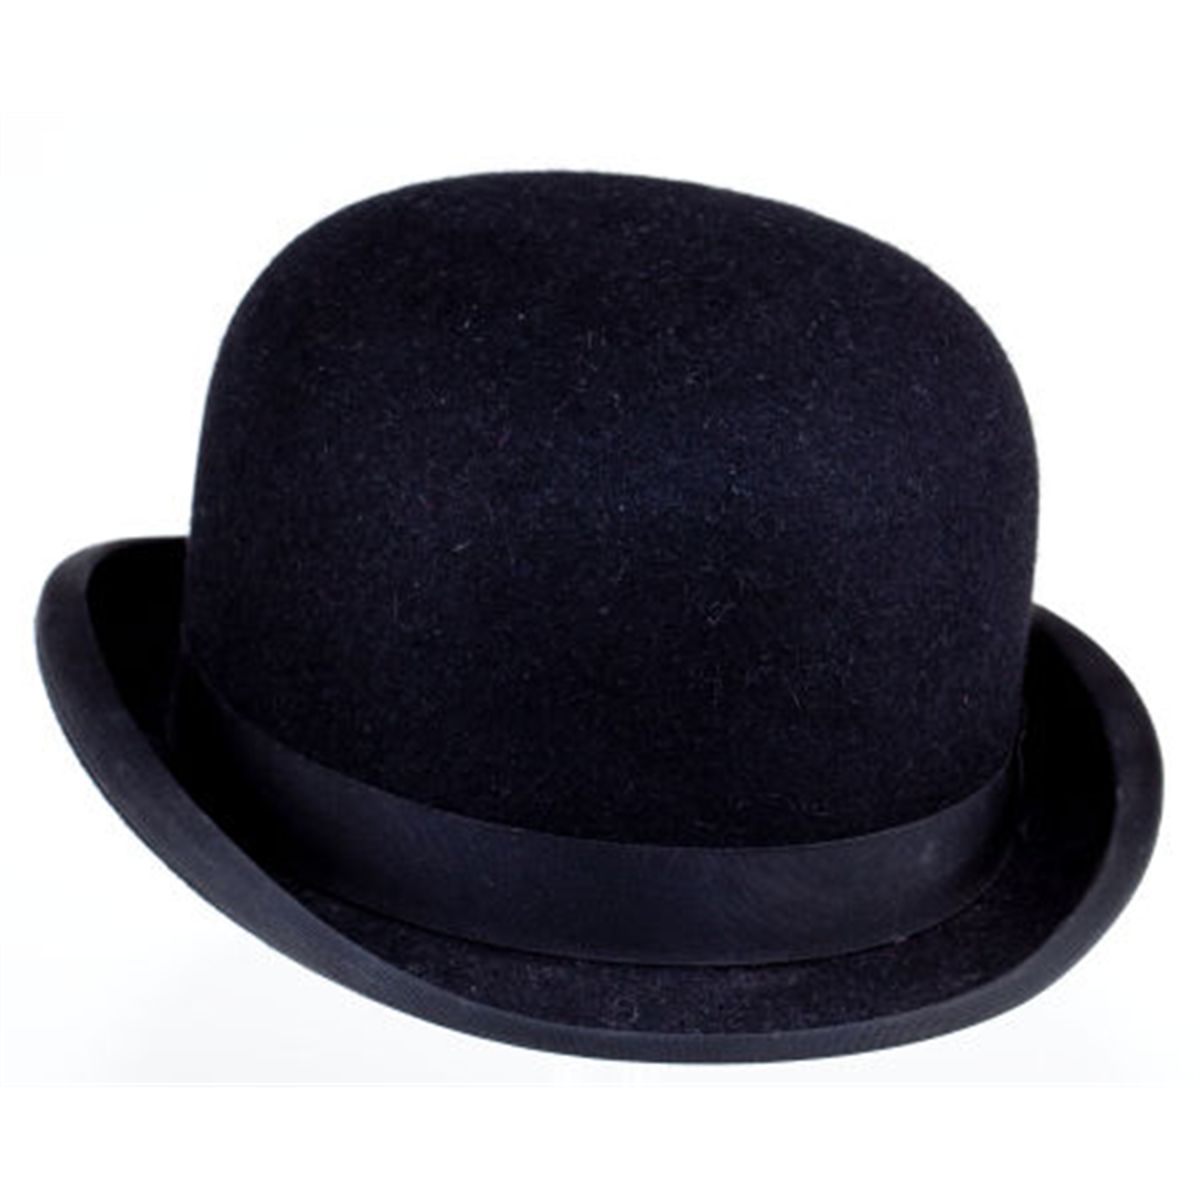 Bowler Hat PNG HD - 150865